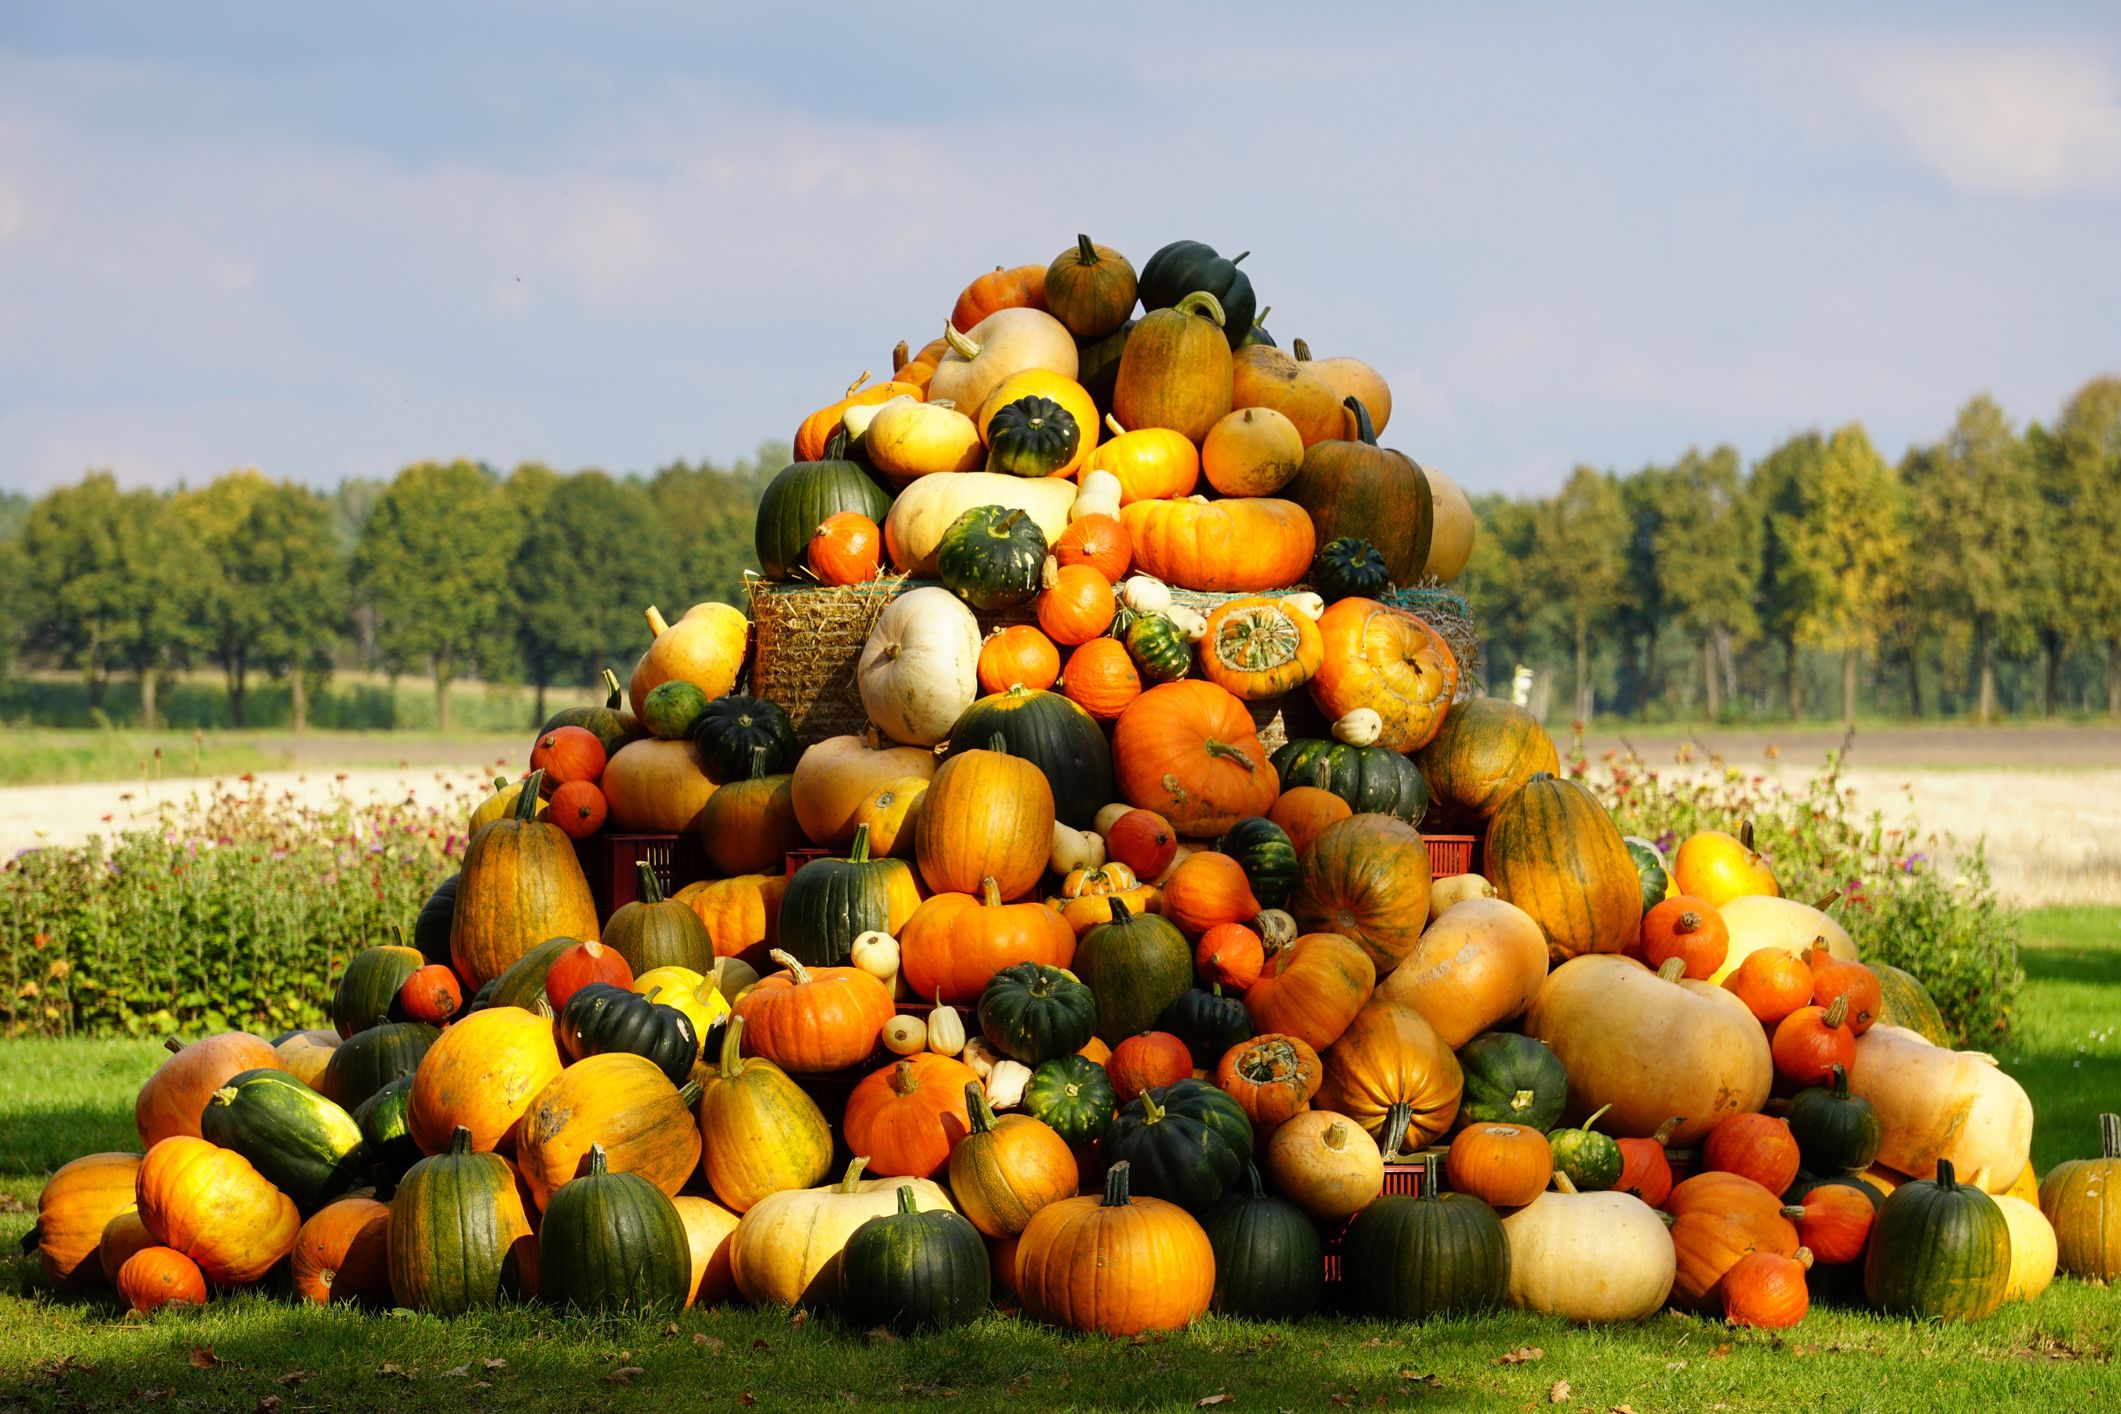 Pumpkins And Squash Pile 1625849564 